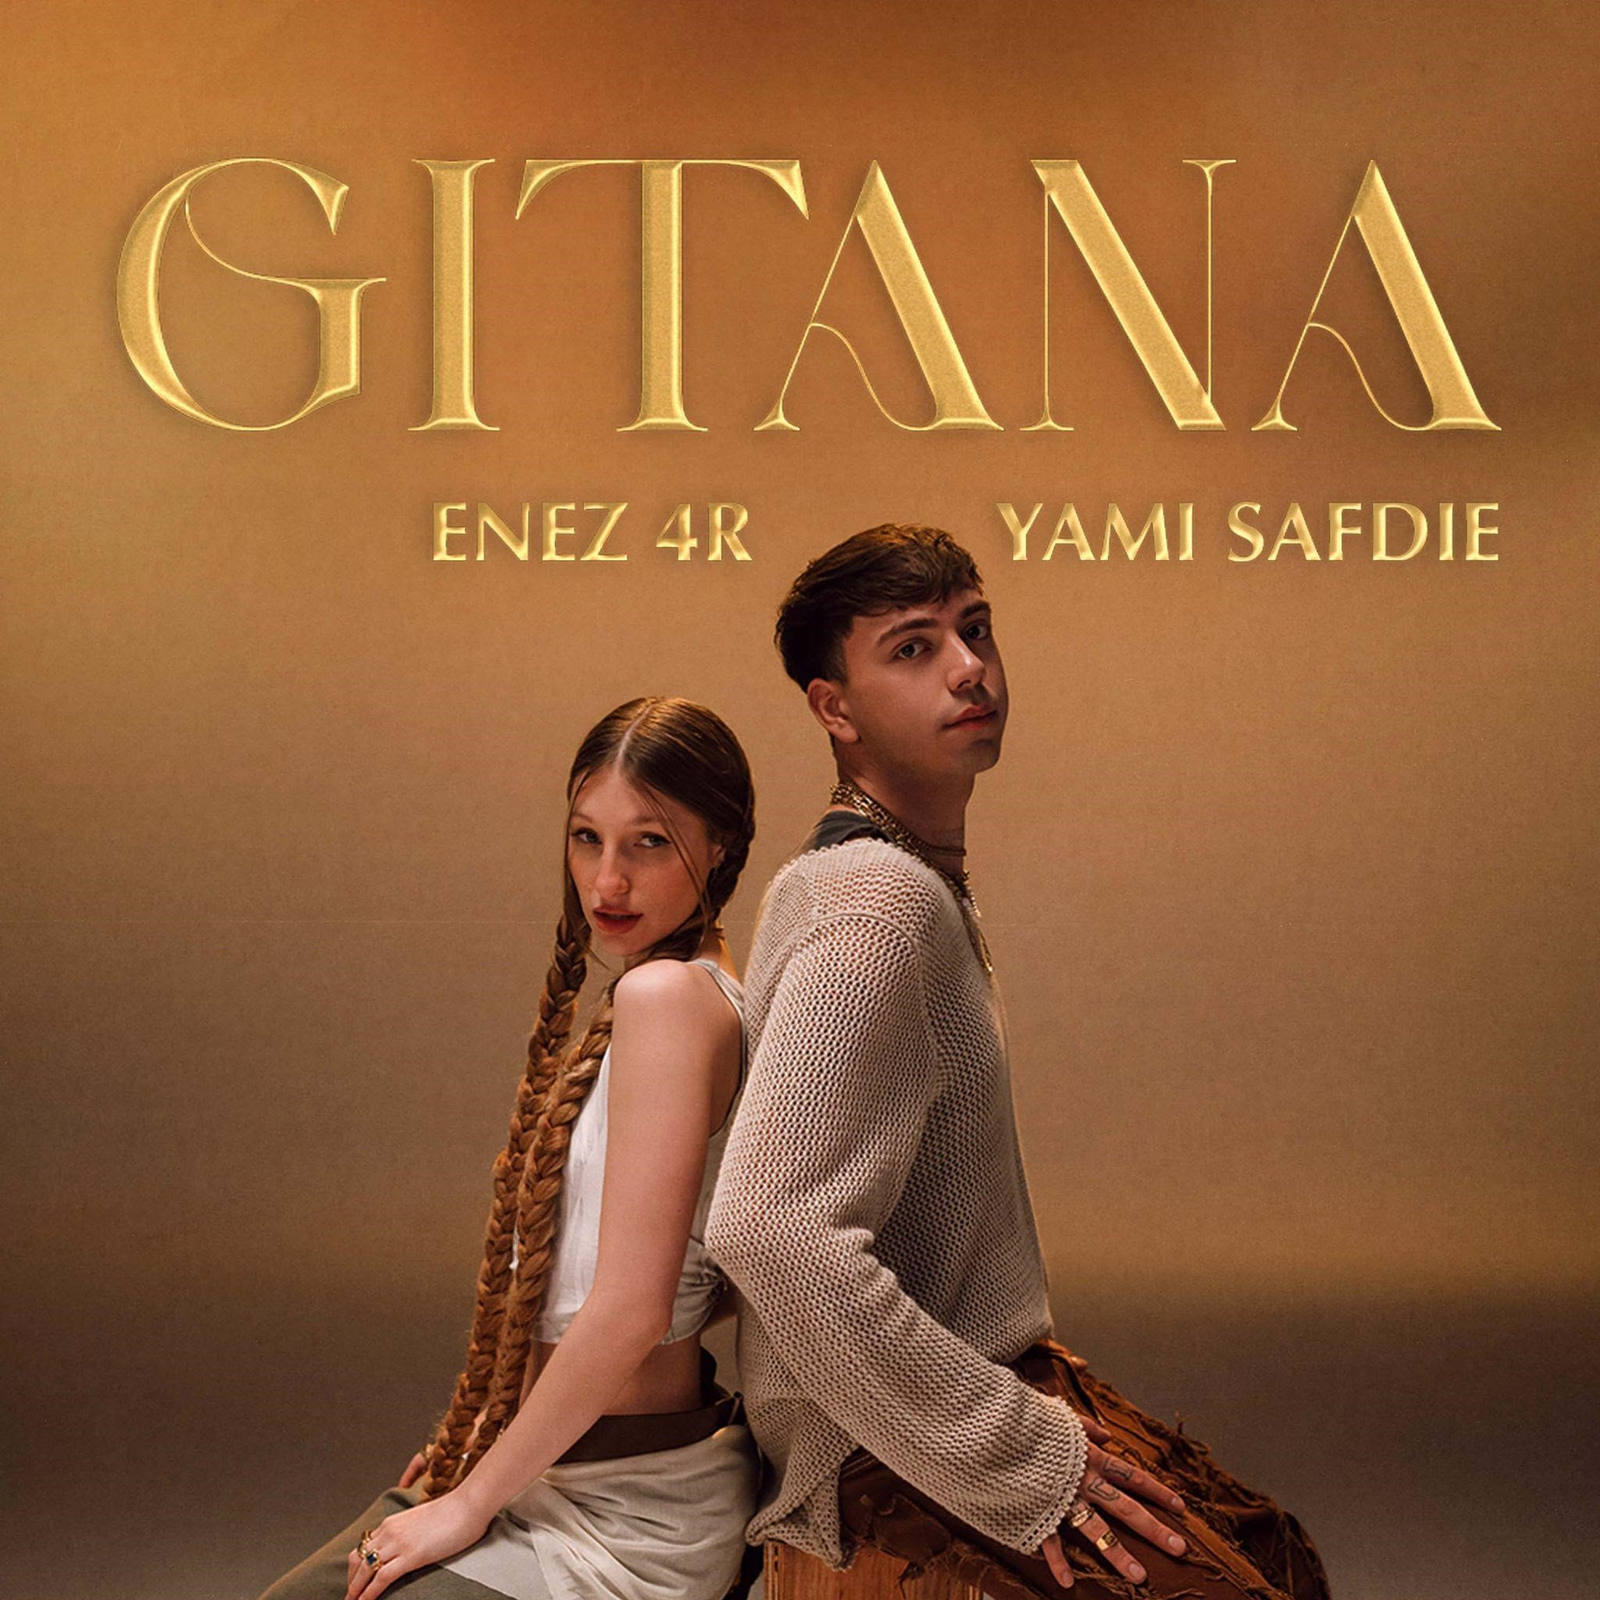 Enez 4R presenta su nuevo single “Gitana” junto a Yami Safdie.